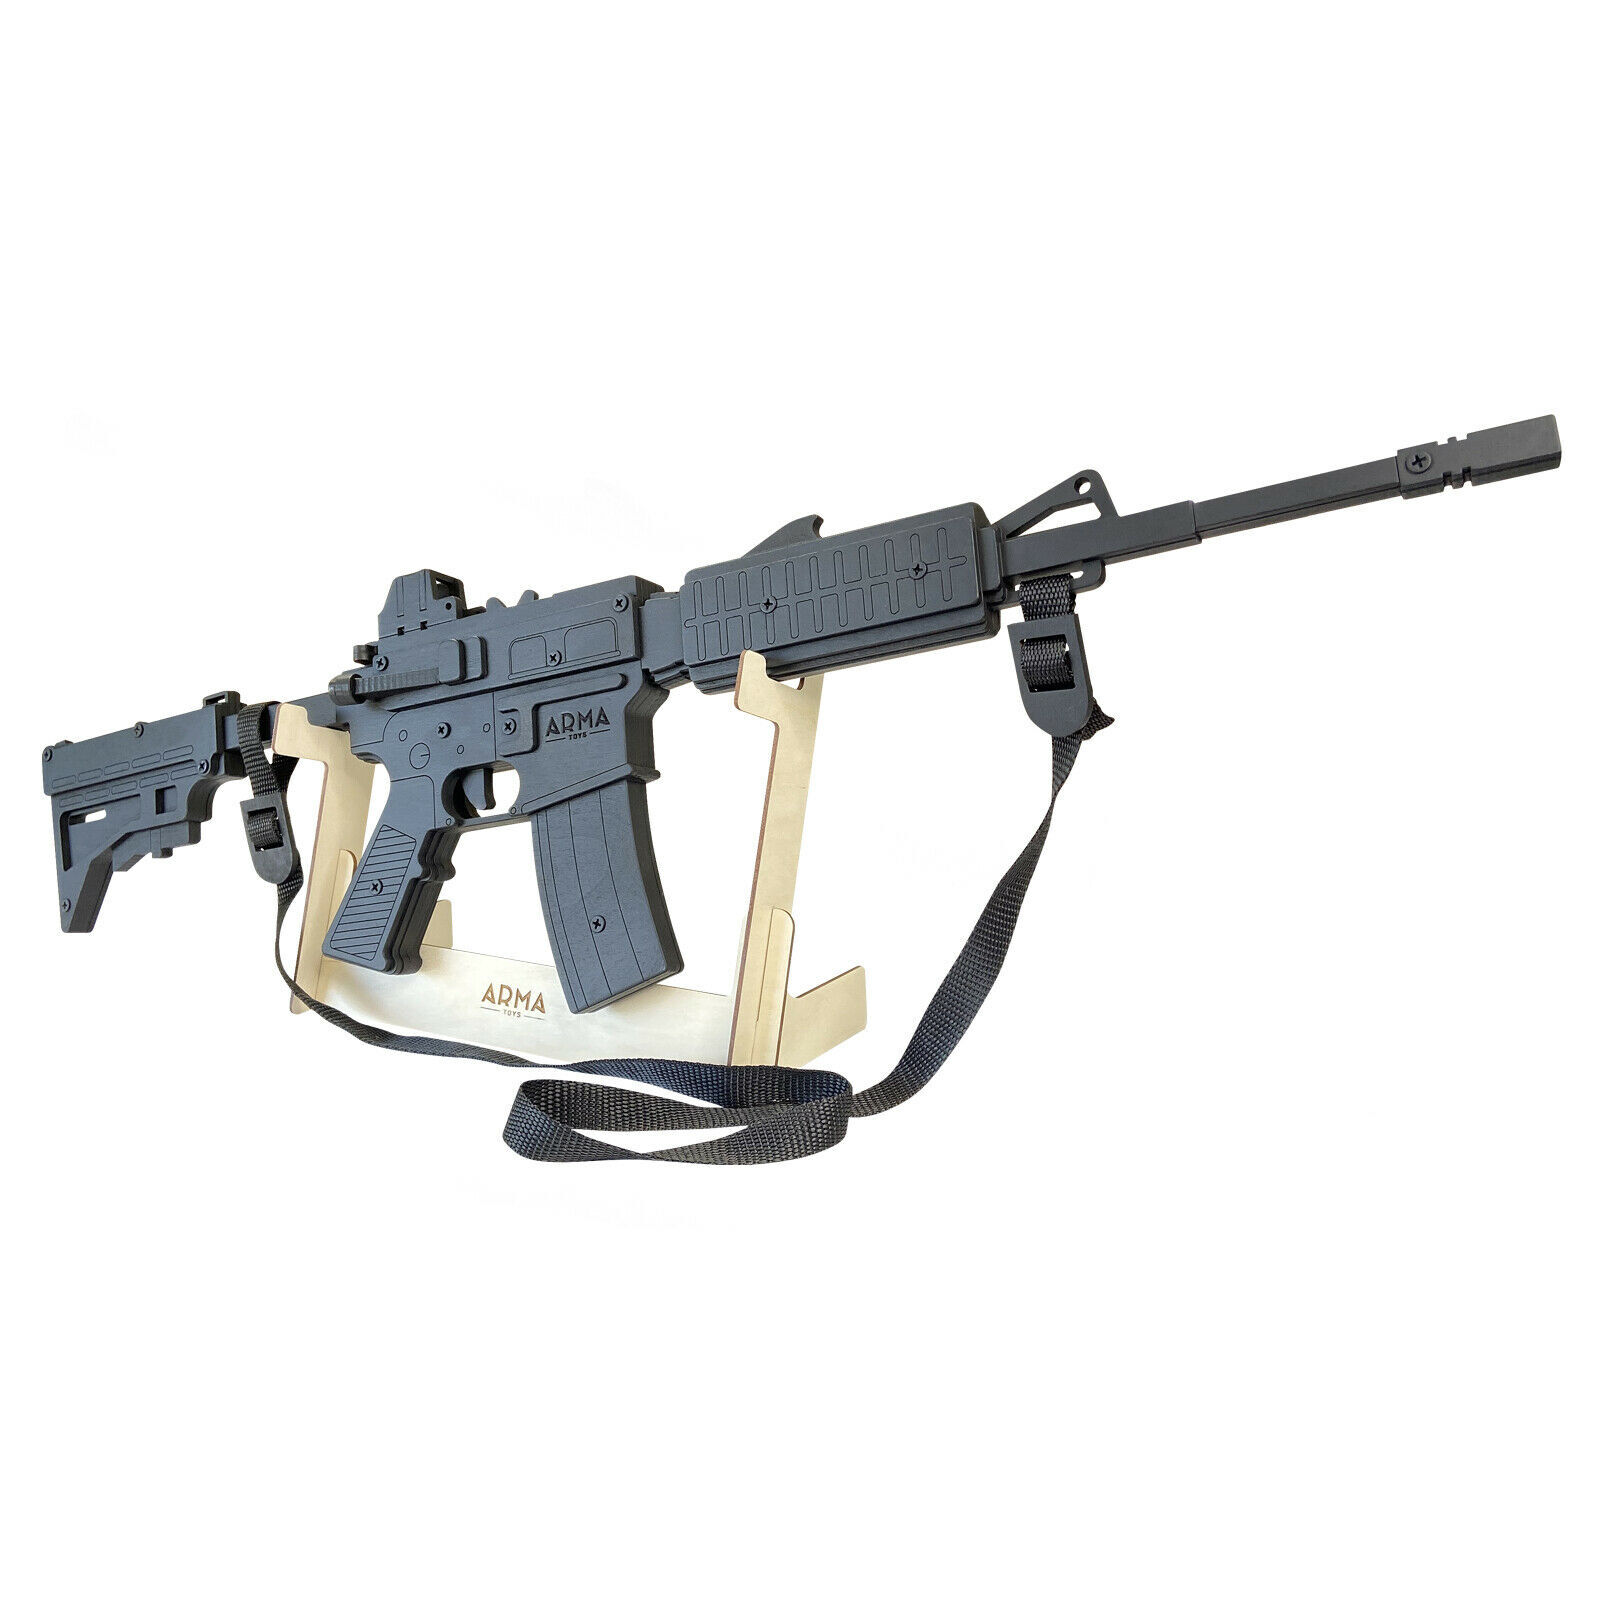 Colt M4 Gummiband Gewehr Arma Toys Spielzeug Kinder Waffe Bundeswehr USA Army 